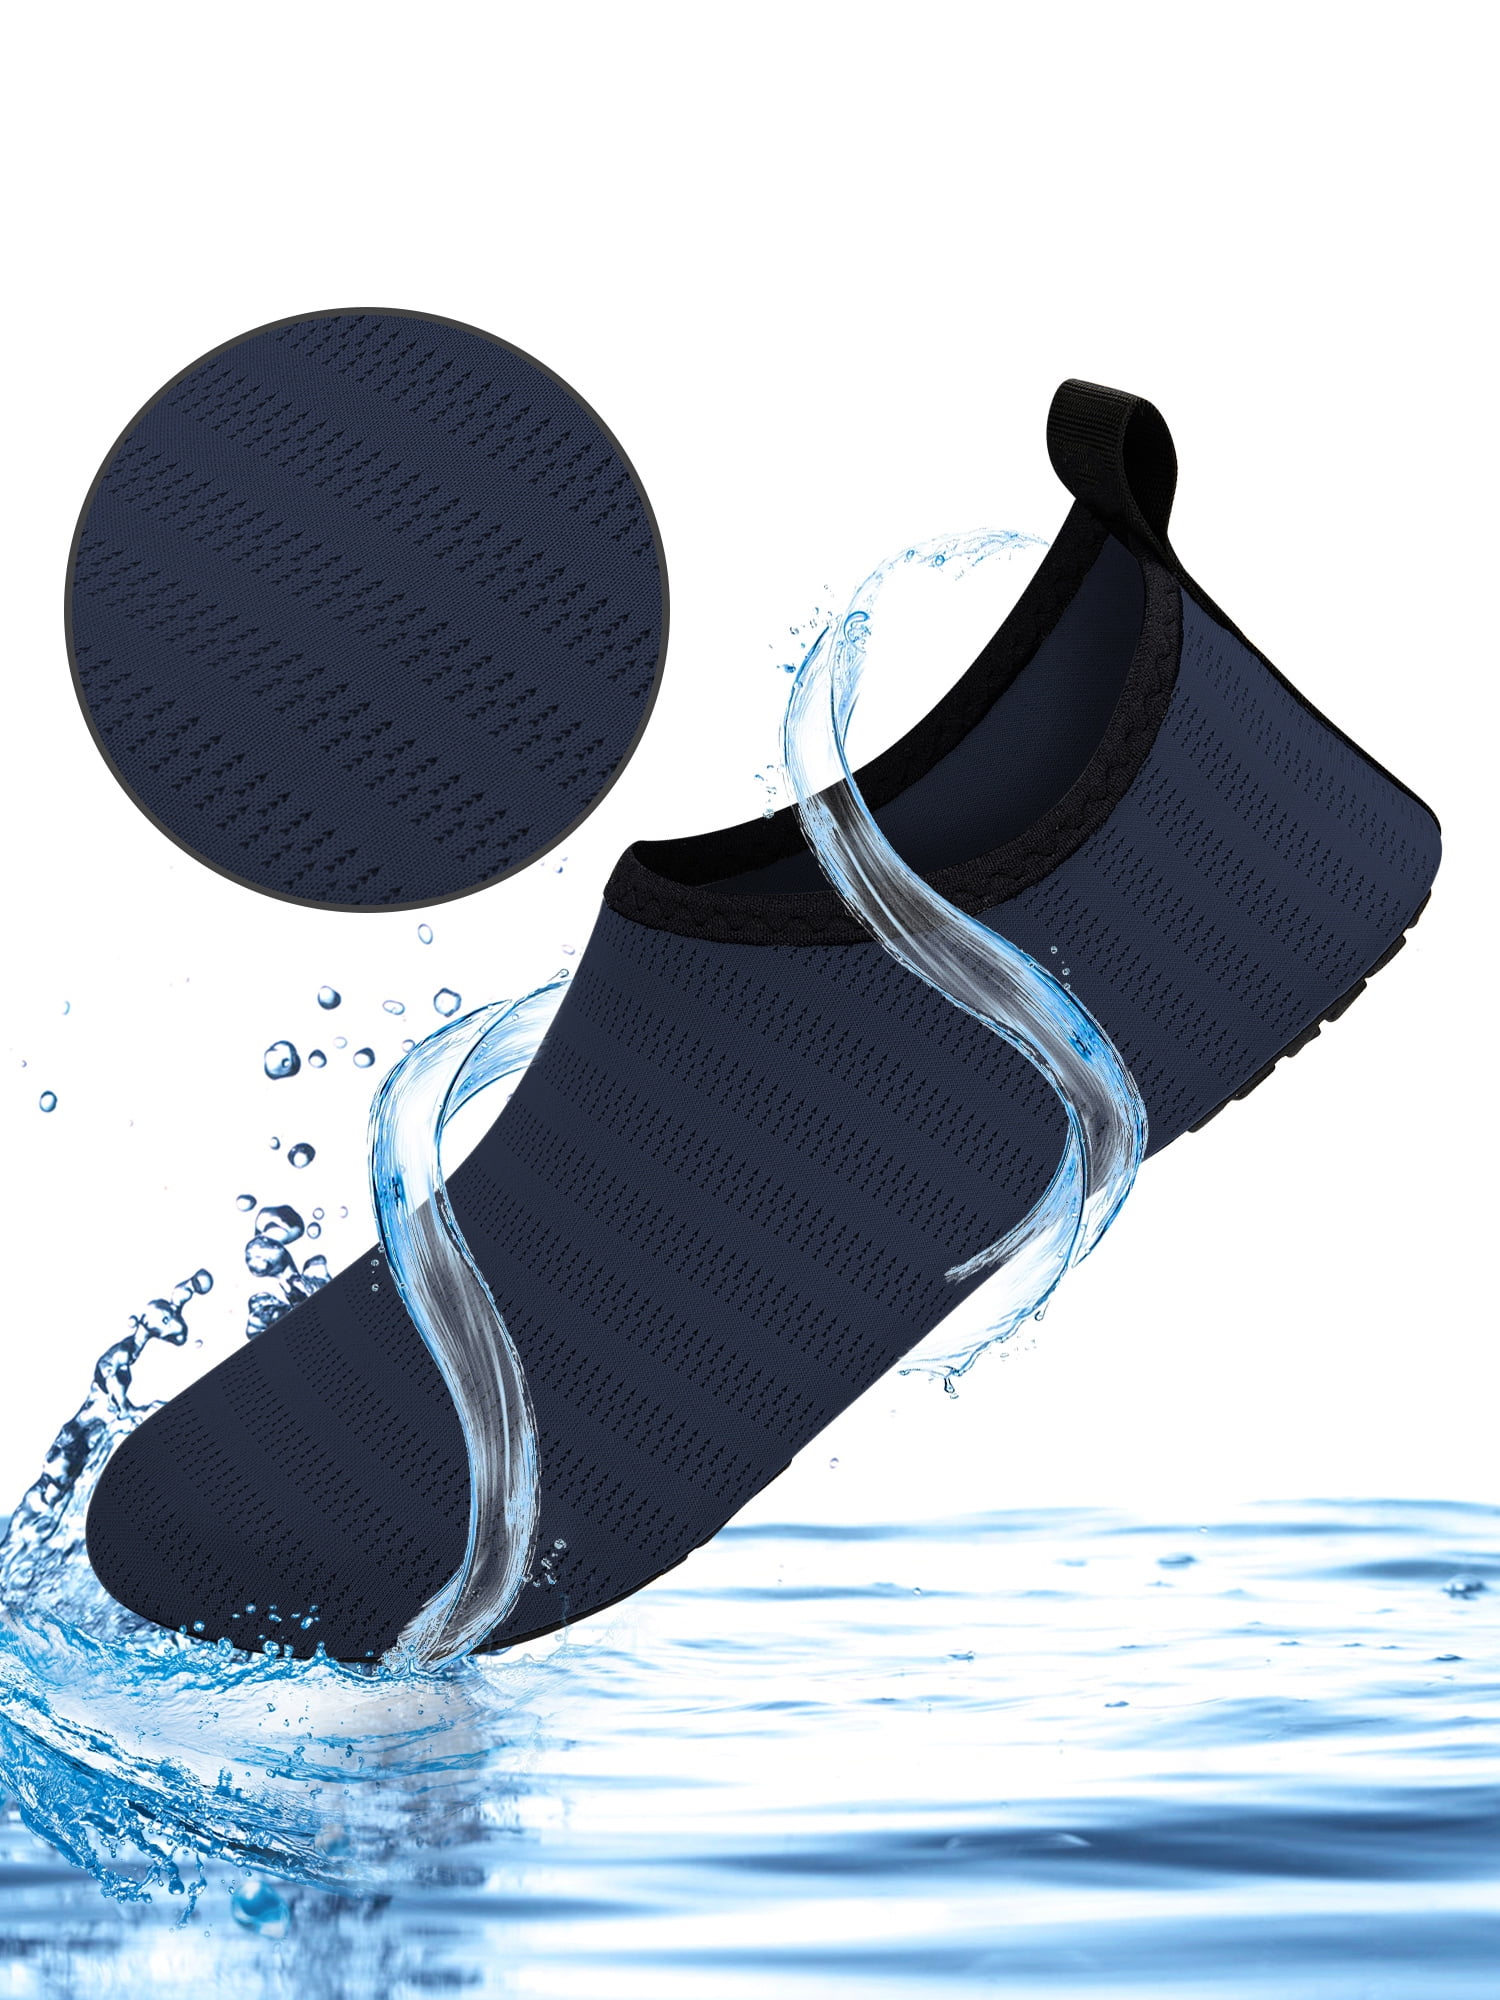 Adult Barefoot Water Sports Aqua Shoes Slip-on Swim Beach Dive Yoga Fitness 